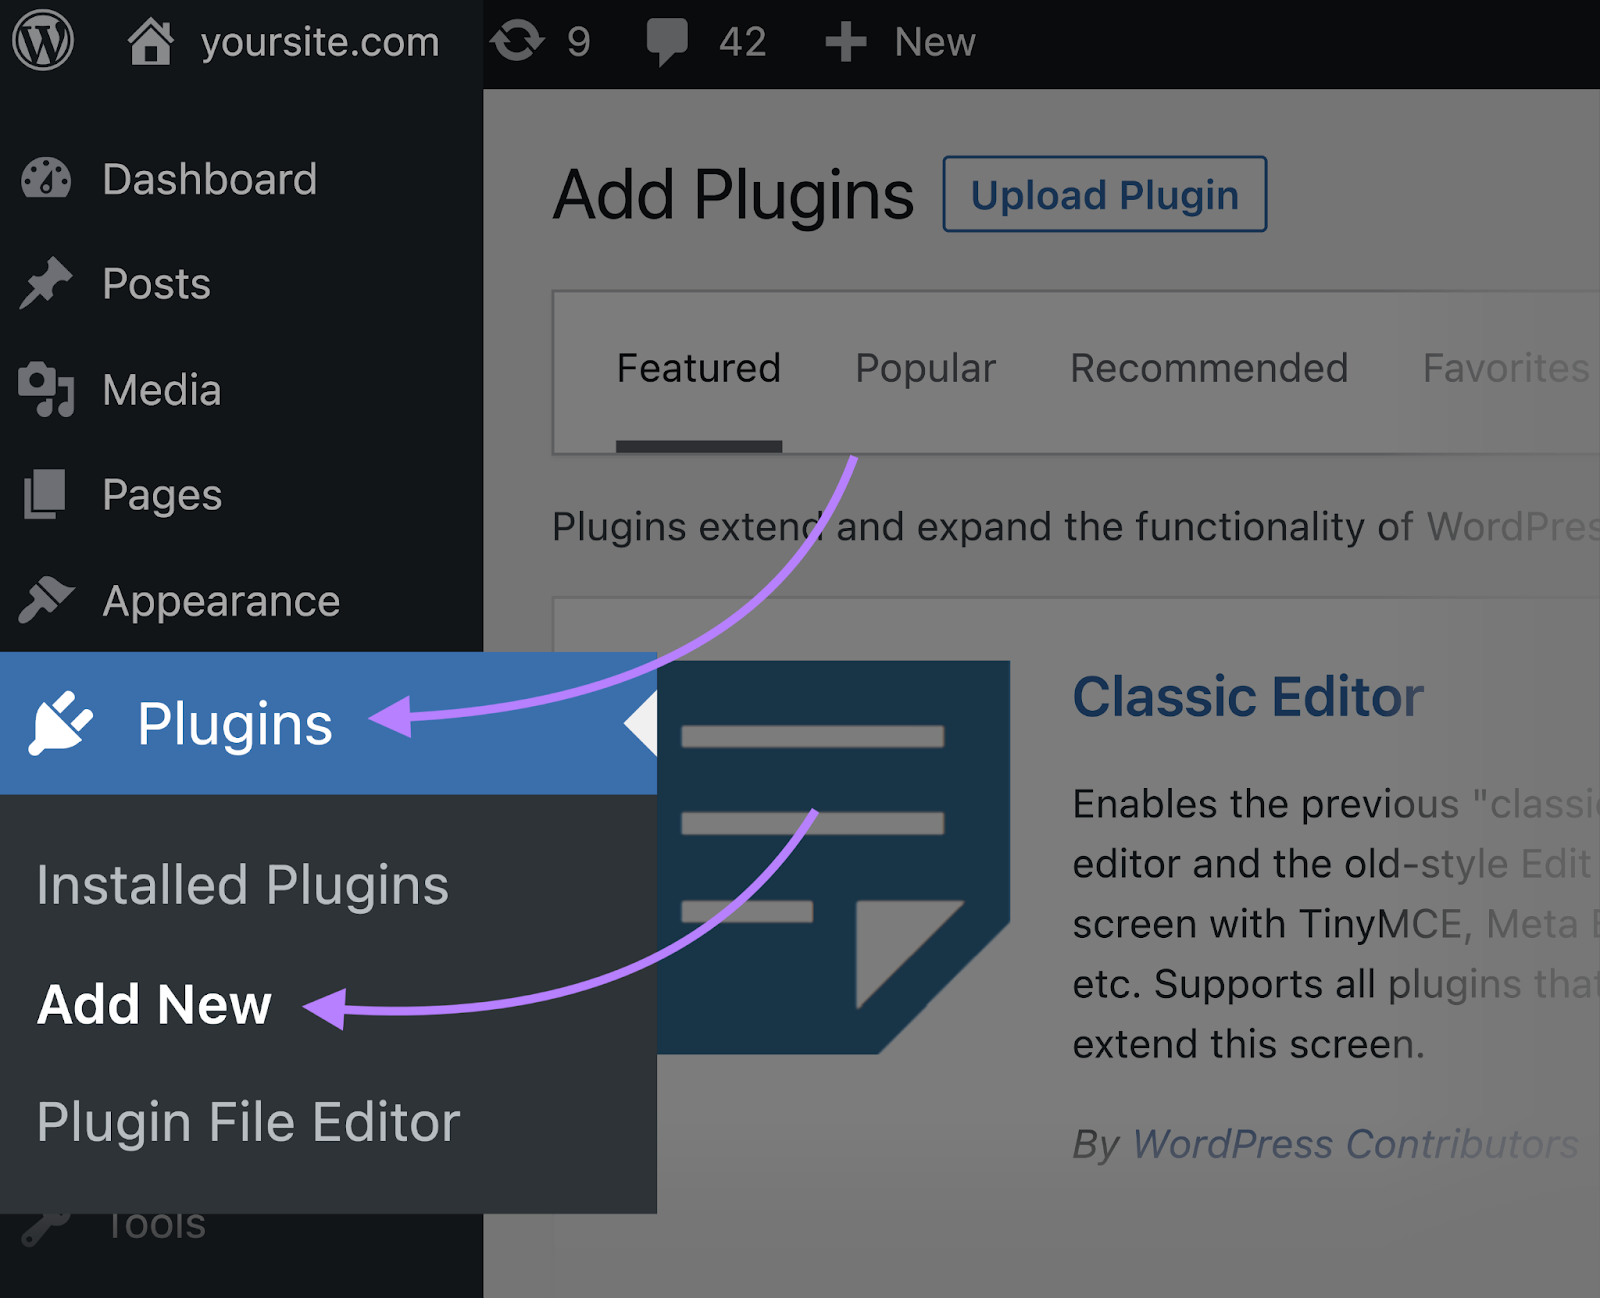 Plugins in WordPress